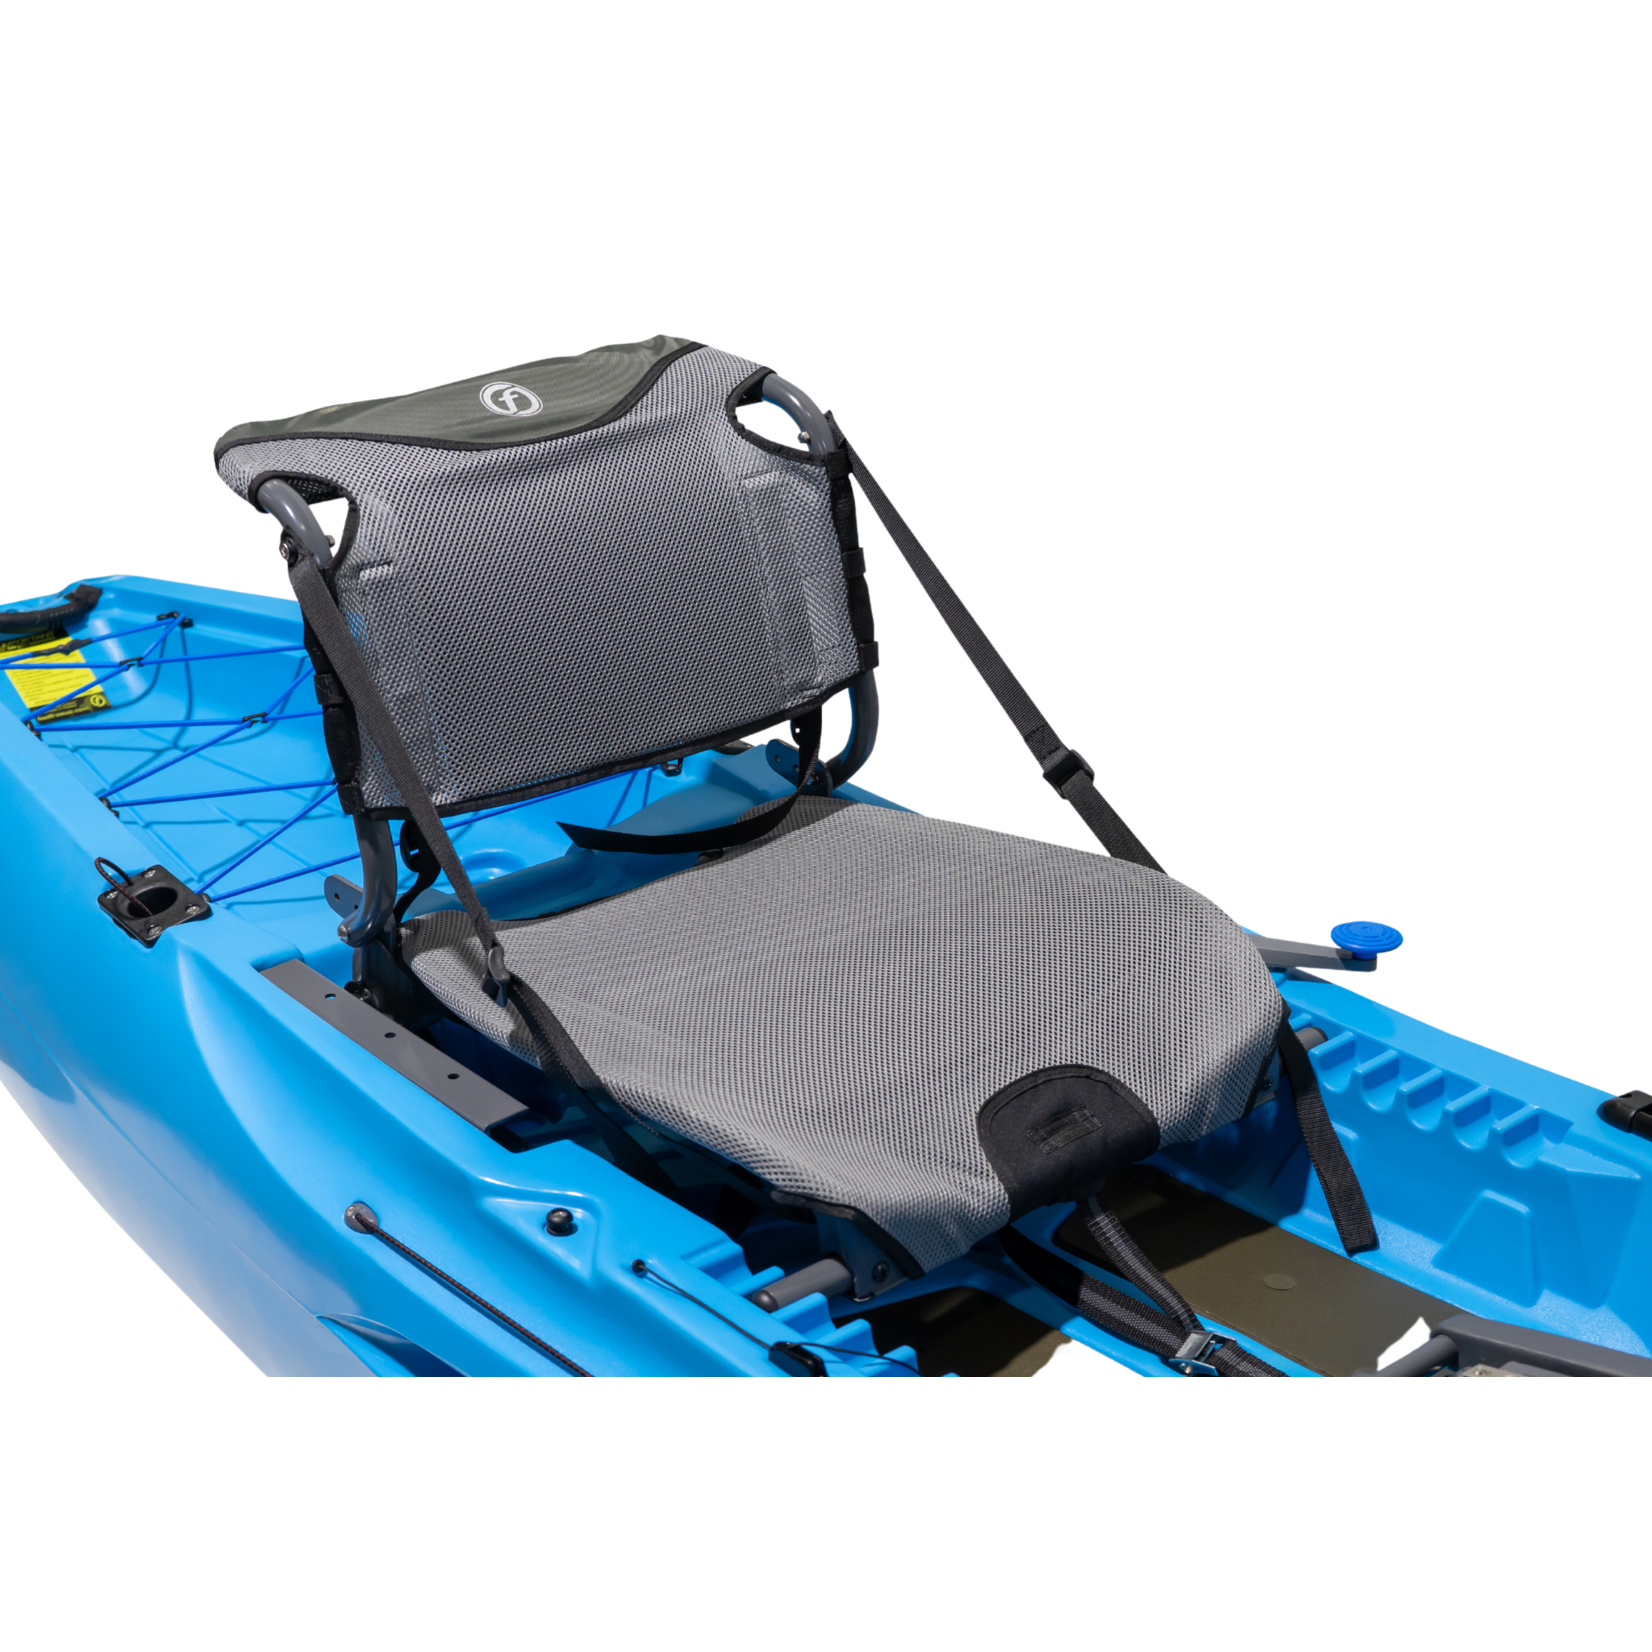 FeelFree FeelFree Flash Kayak with Rapid Pedal Drive